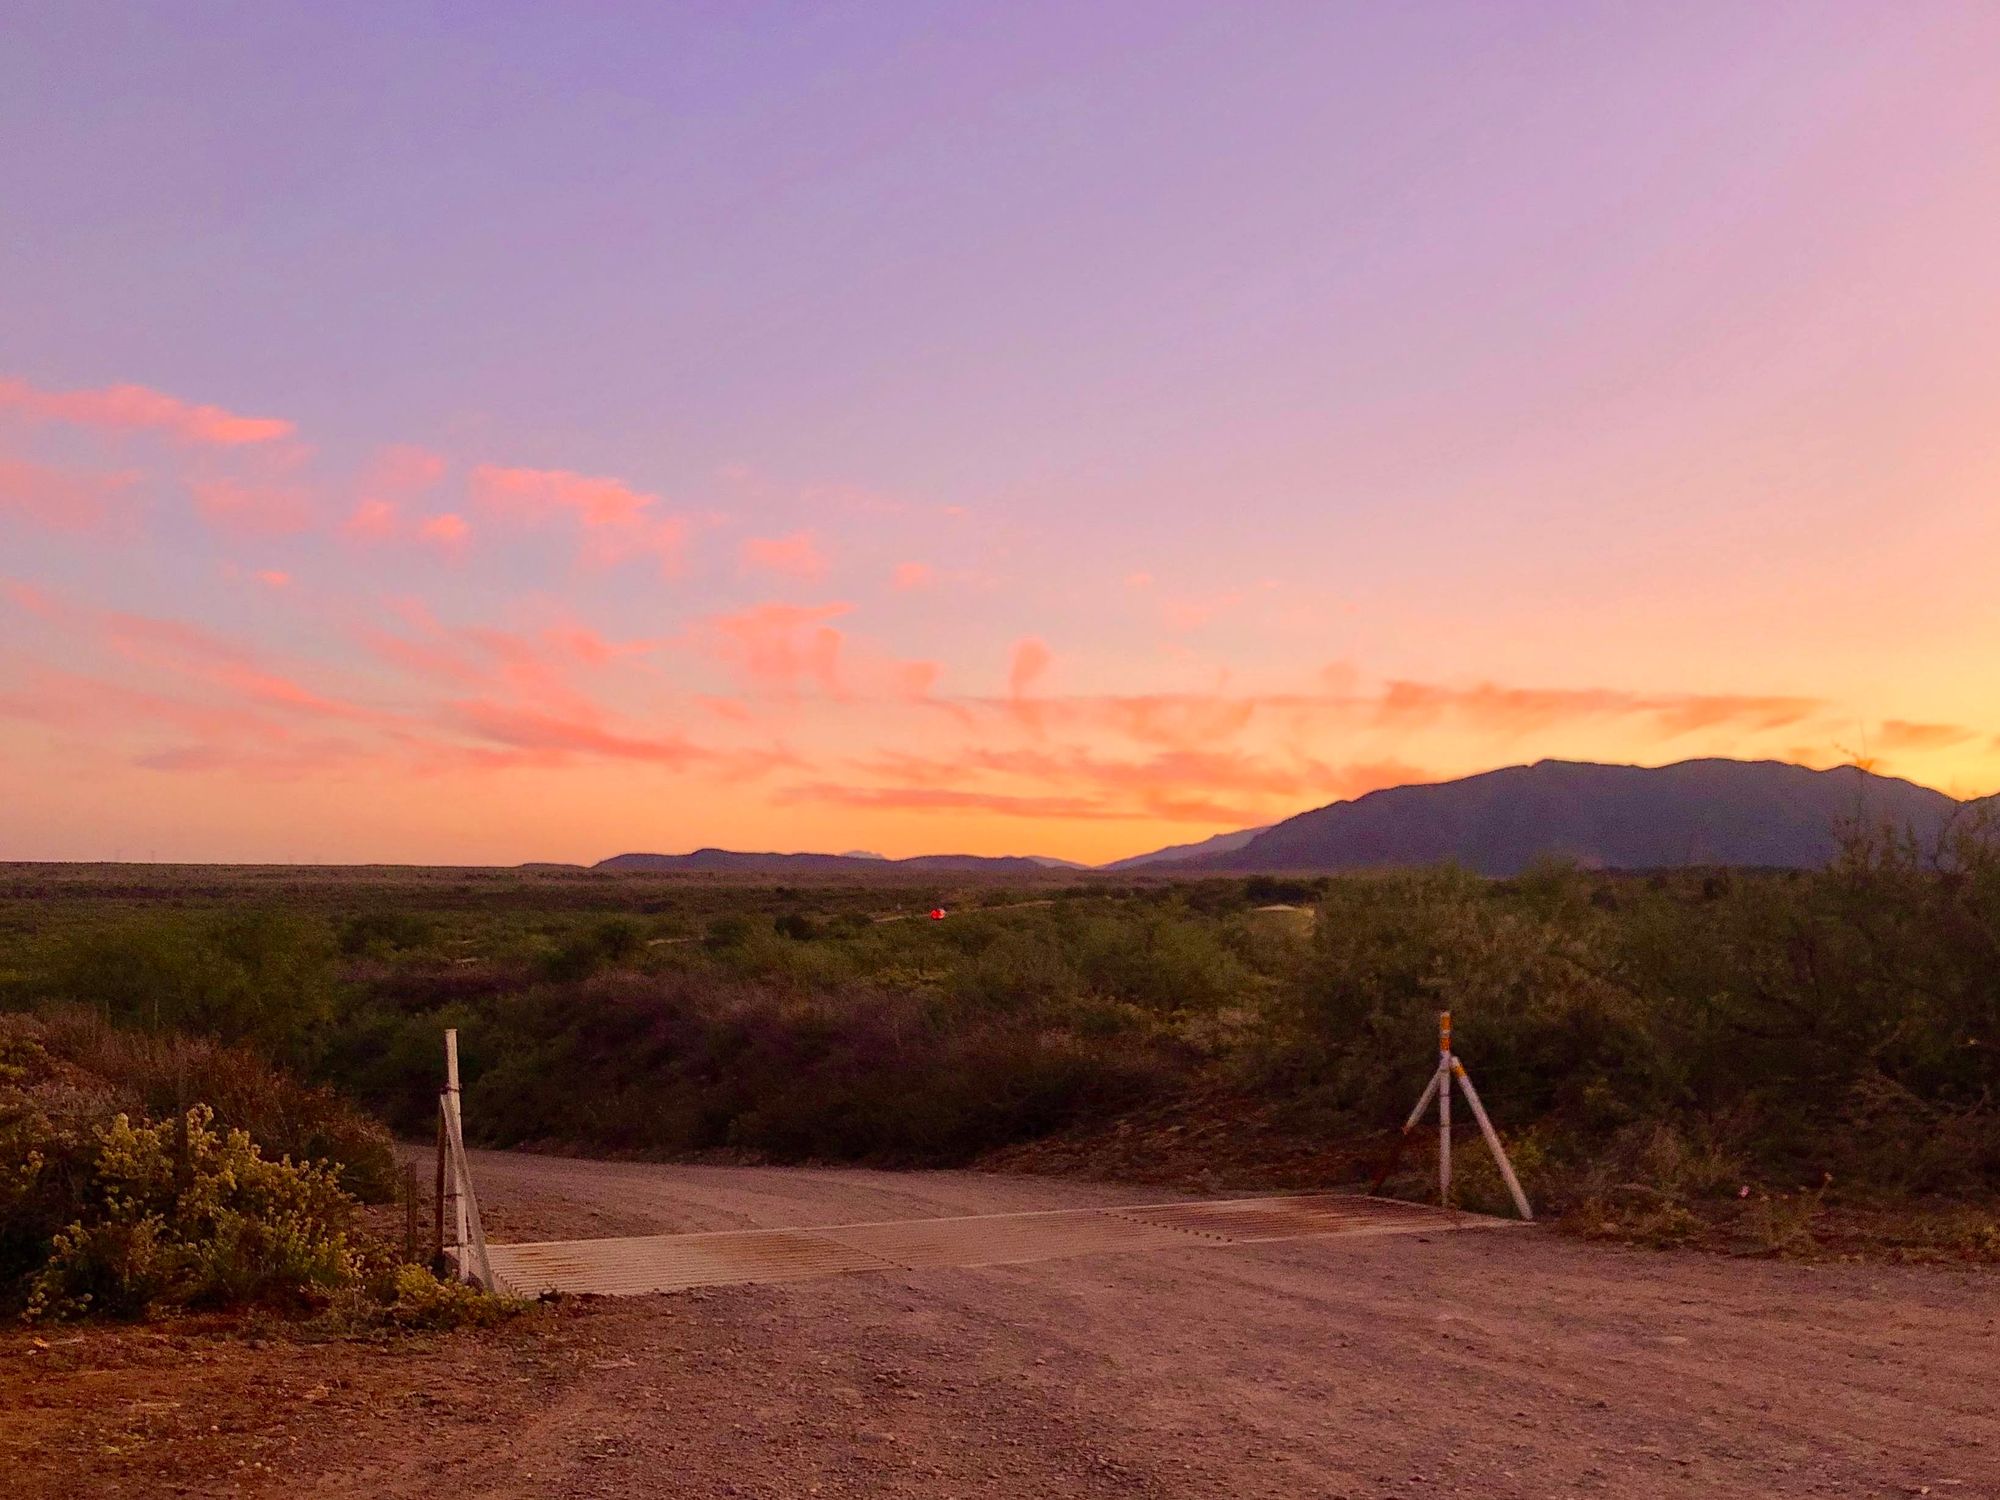 light orange, yellow, pink, and purple sunset behind purple mountains in the desert in Arizona